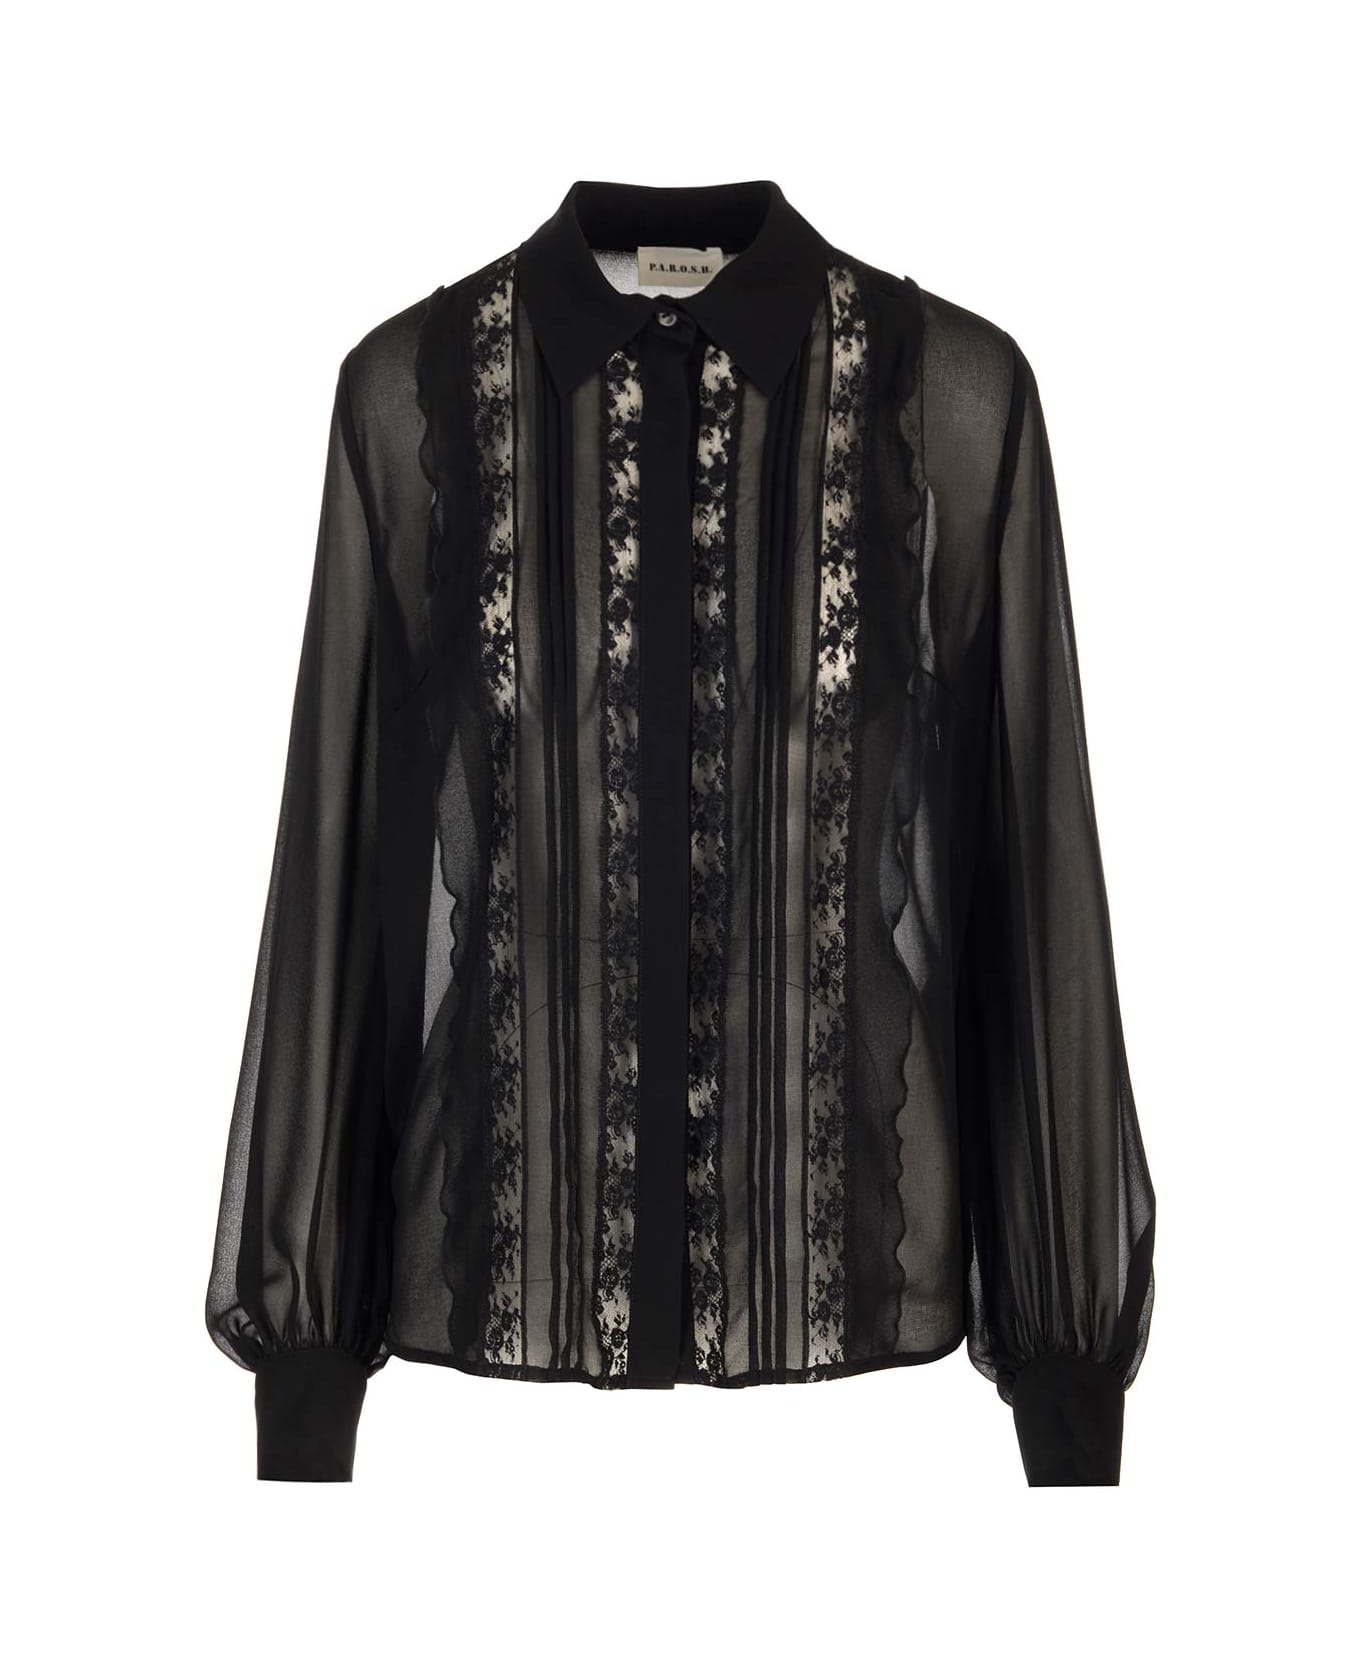 Parosh Black Shirt With Lace Details - Nero